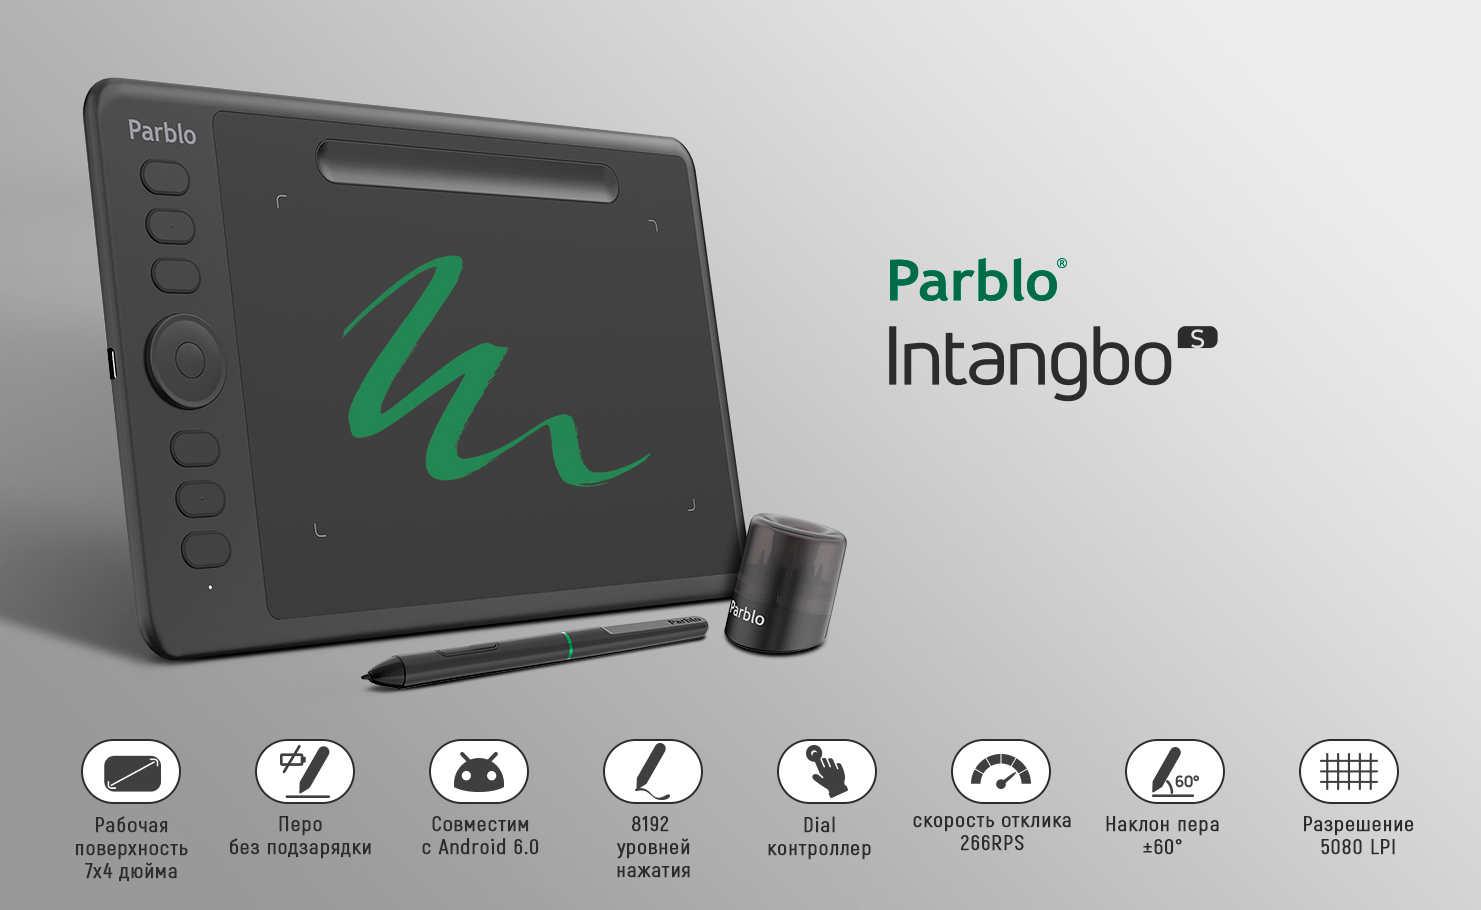 Parblo com support. Графический планшет intangbo s. Parblo intangbo s. Графический планшет парбло. Purblo intangbo s.